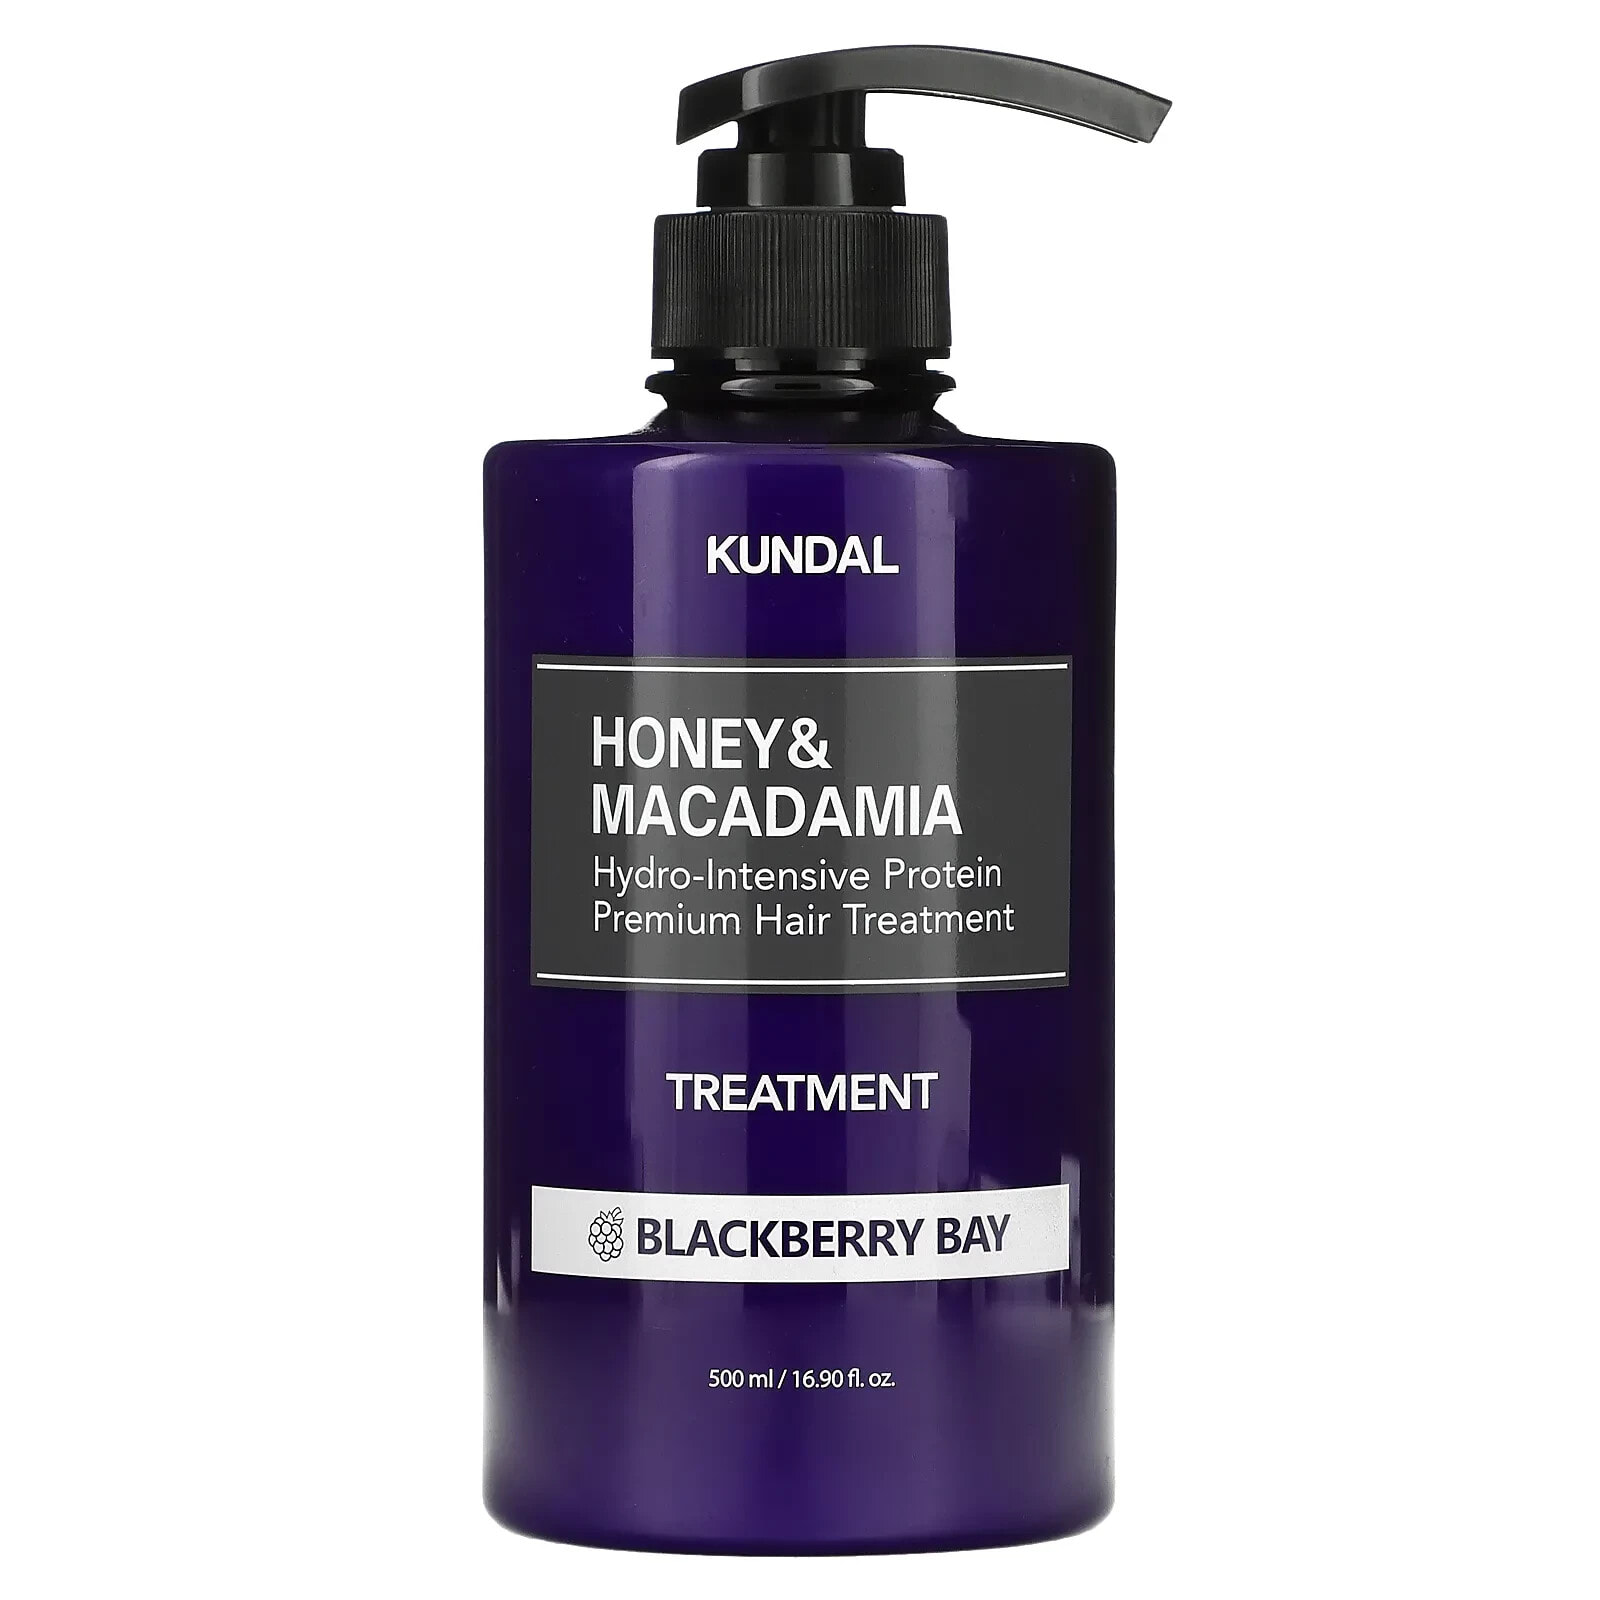 Kundal, Honey & Macadamia, Treatment, Blackberry Bay, 16.9 fl oz (500 ml)